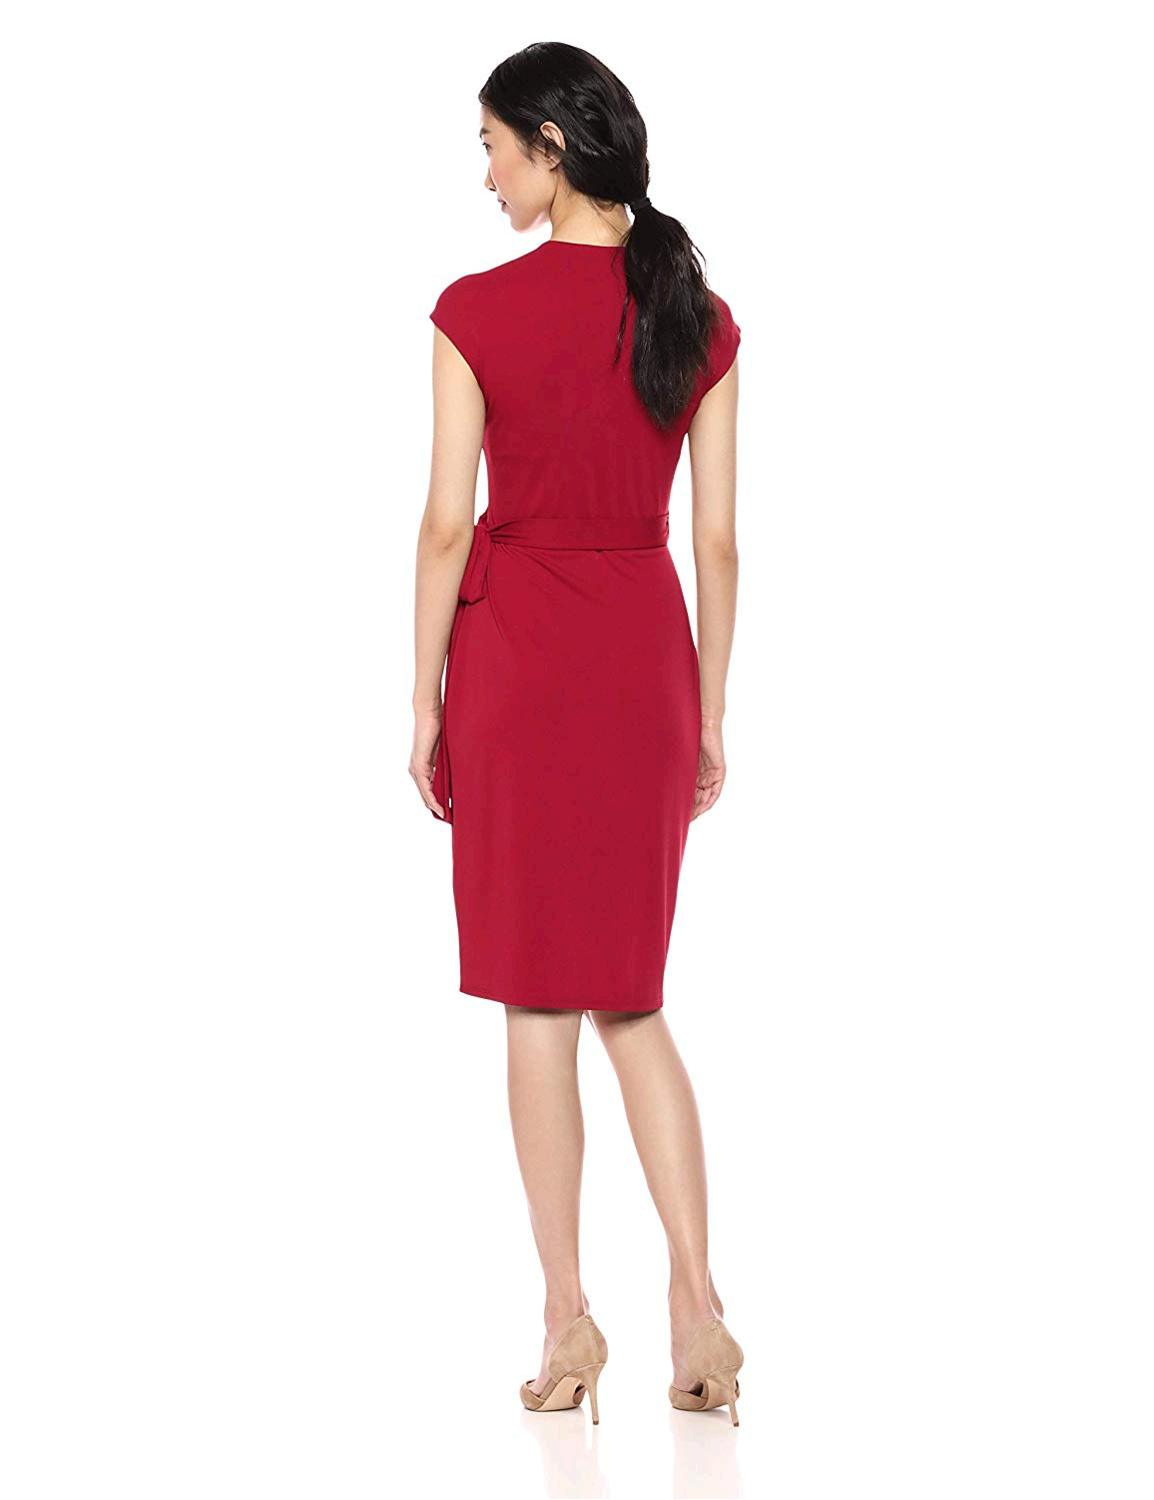 Lark & Ro Women's Classic Cap Sleeve Wrap Dress,, Scarlet Red, Size ...